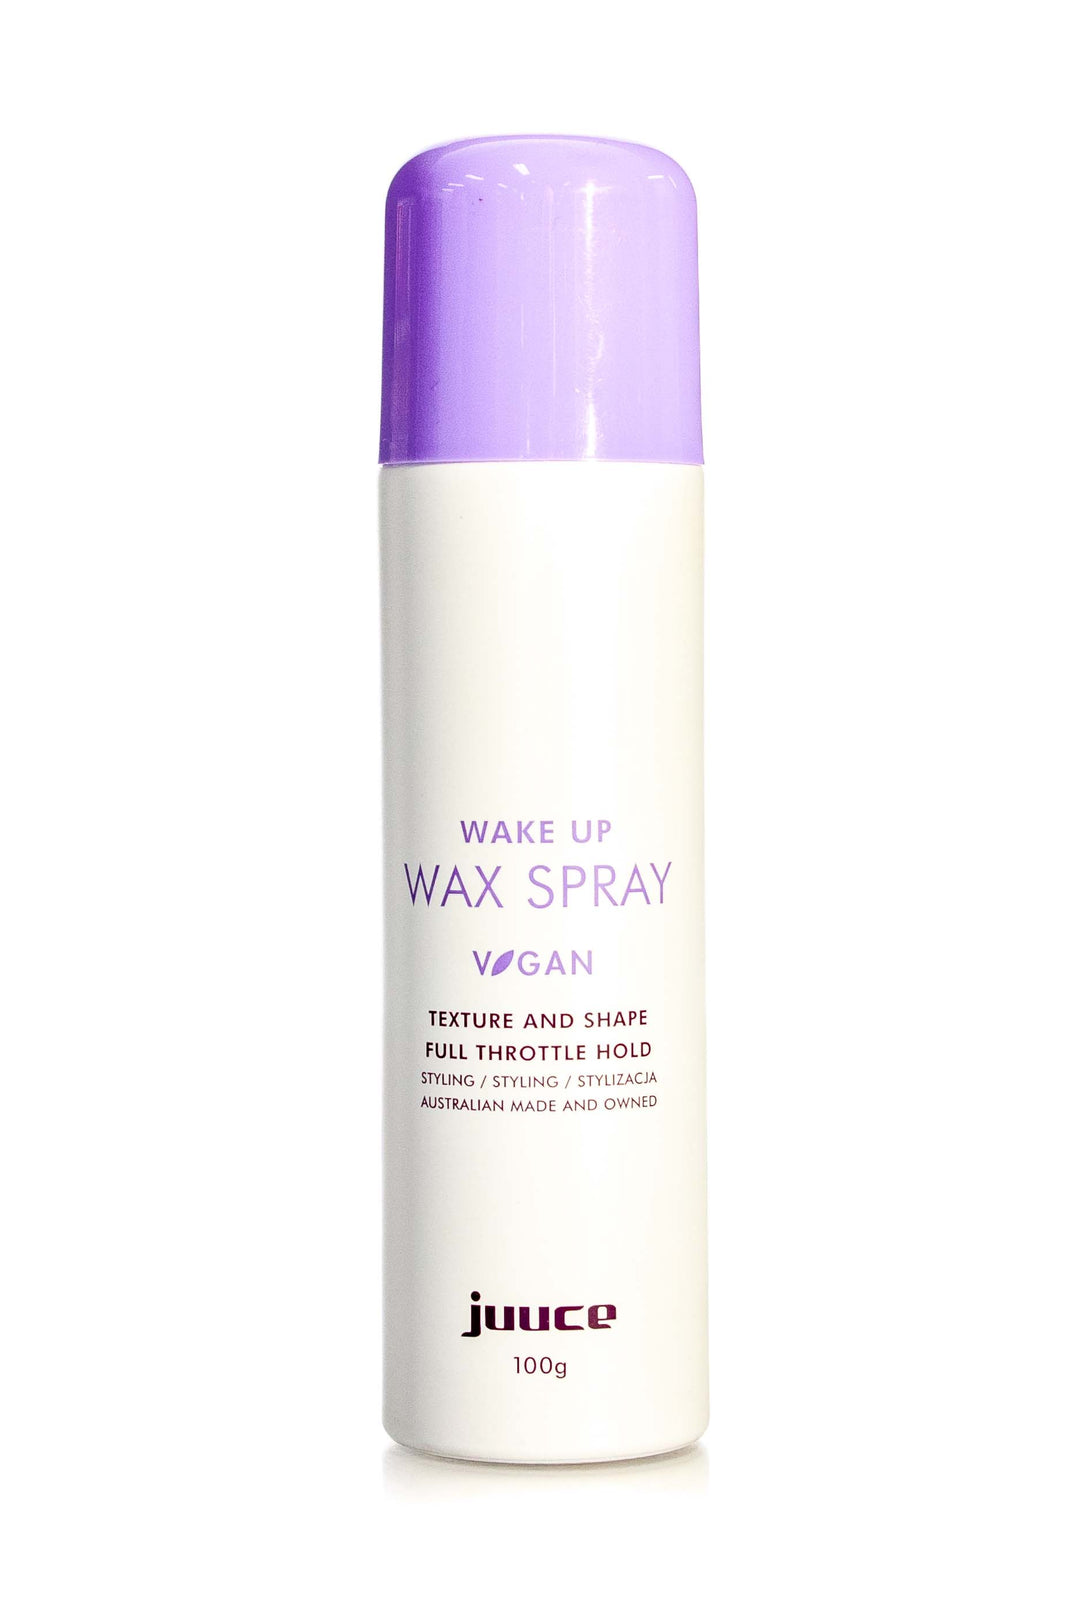 Juuce Wake Up Wax Spray